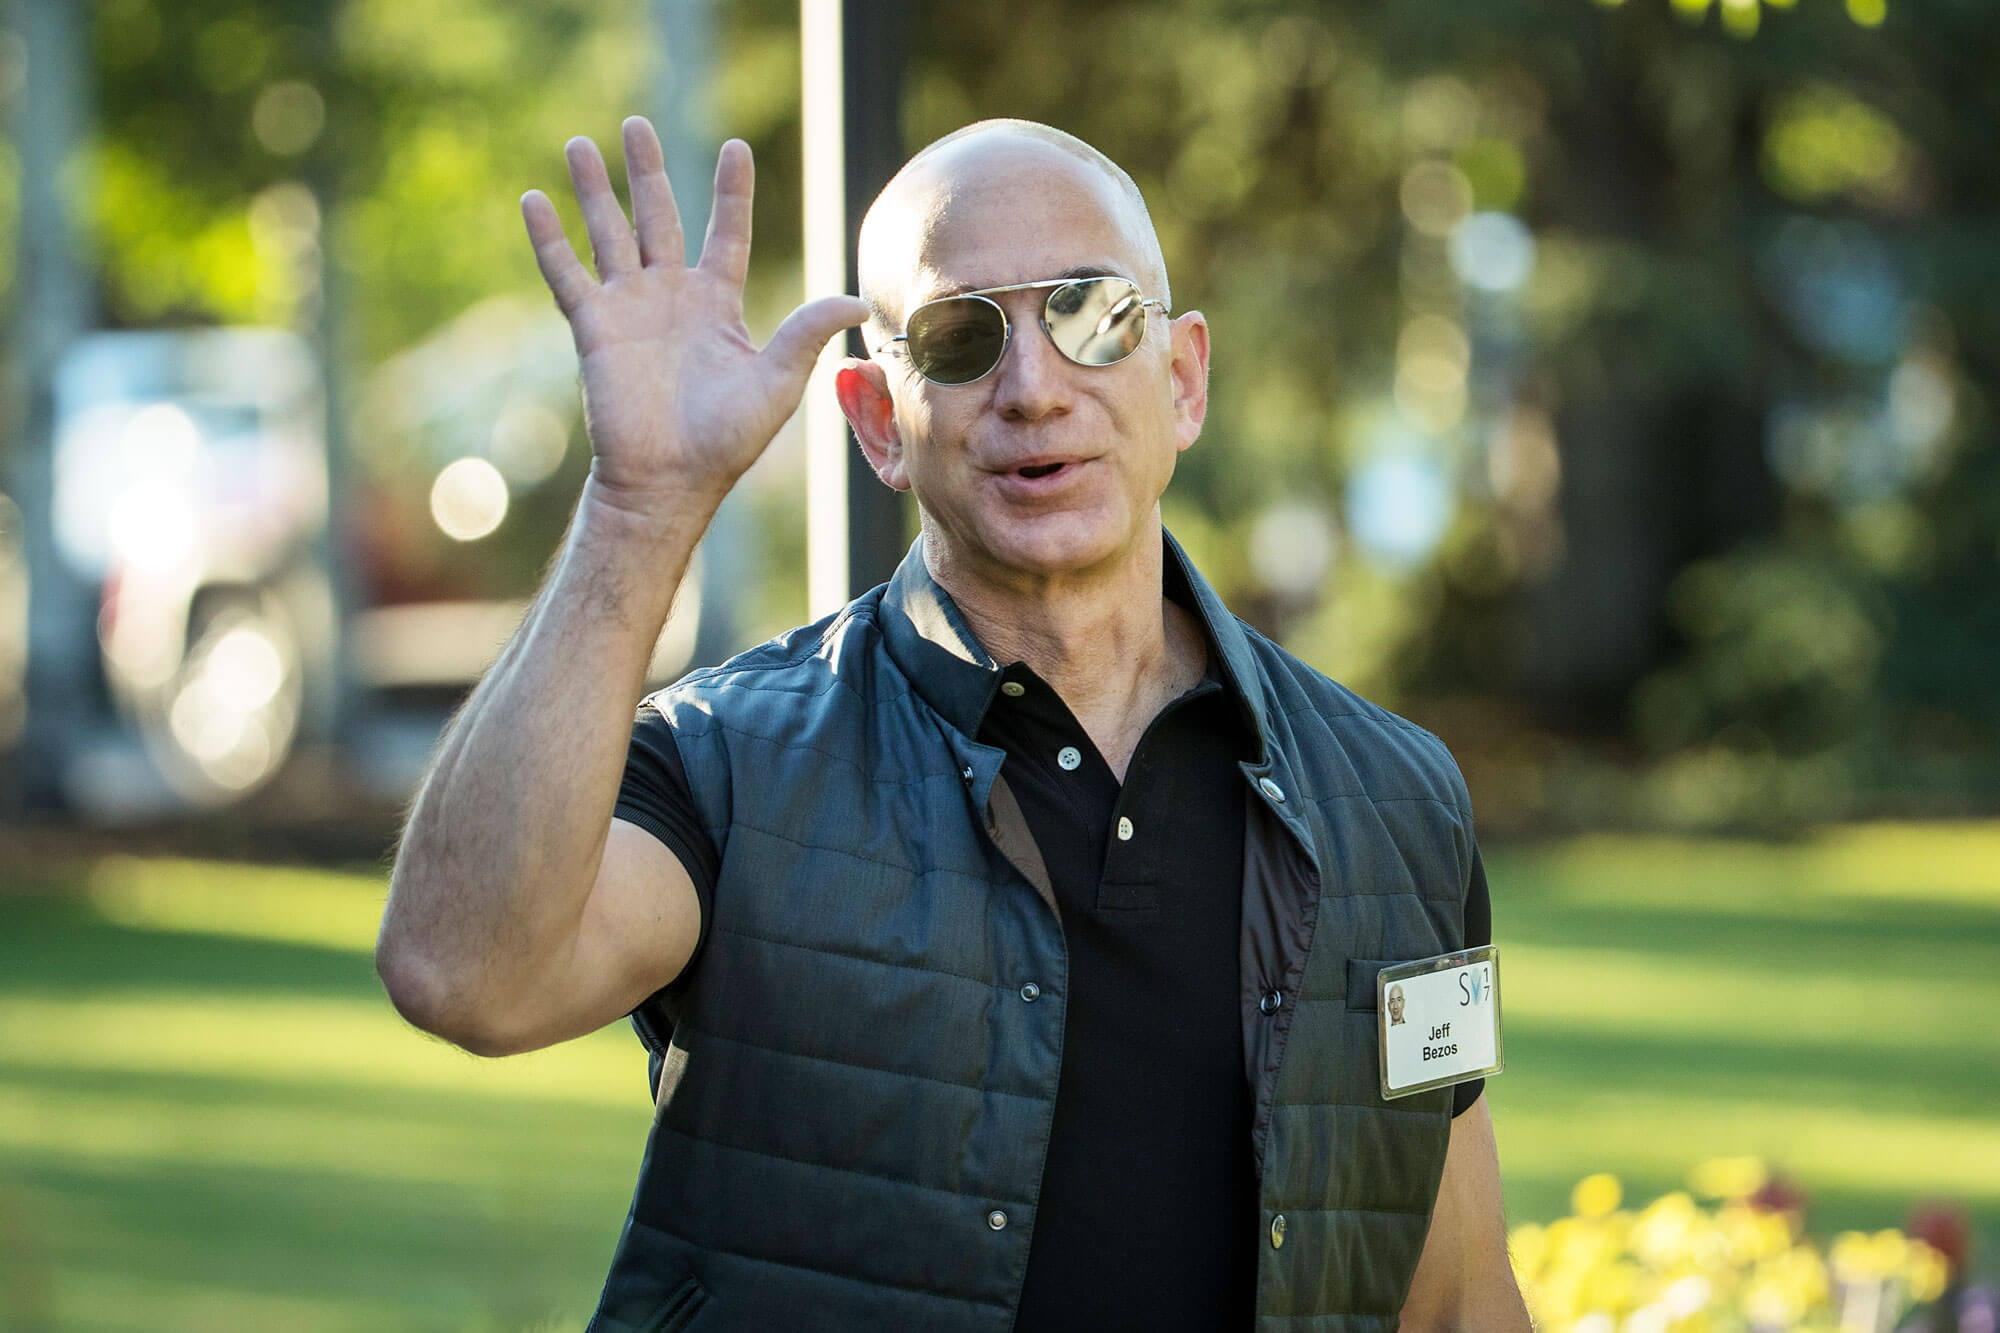 Jeff Bezos says Amazon will fail and go bankrupt one day